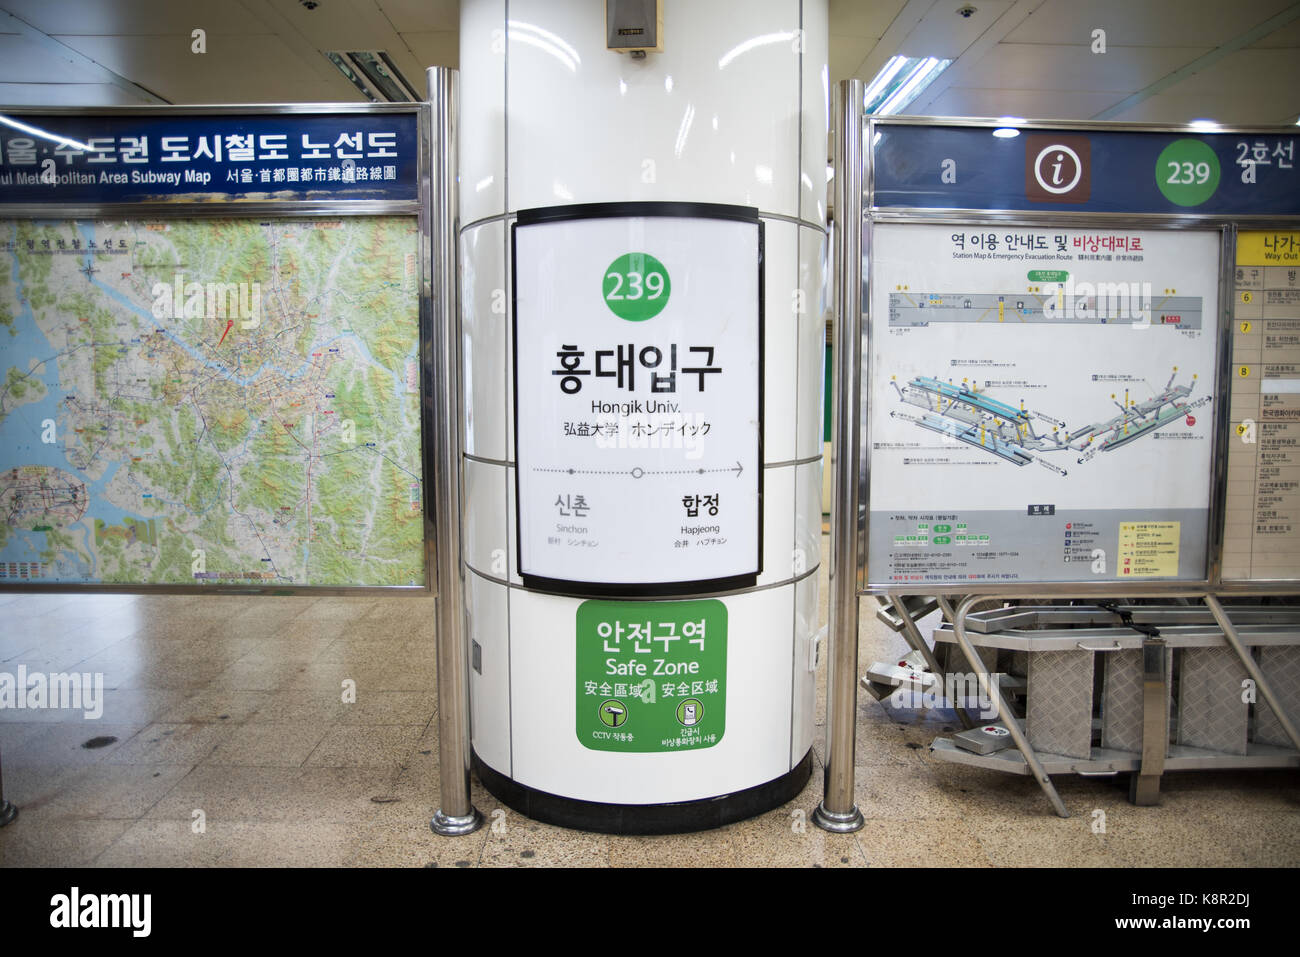 Hongdae(hongik university) stazione metropolitana segno. seoul metropolitan area mappa della metropolitana e la stazione mappa & evacuazione di emergenza rotta. Foto Stock